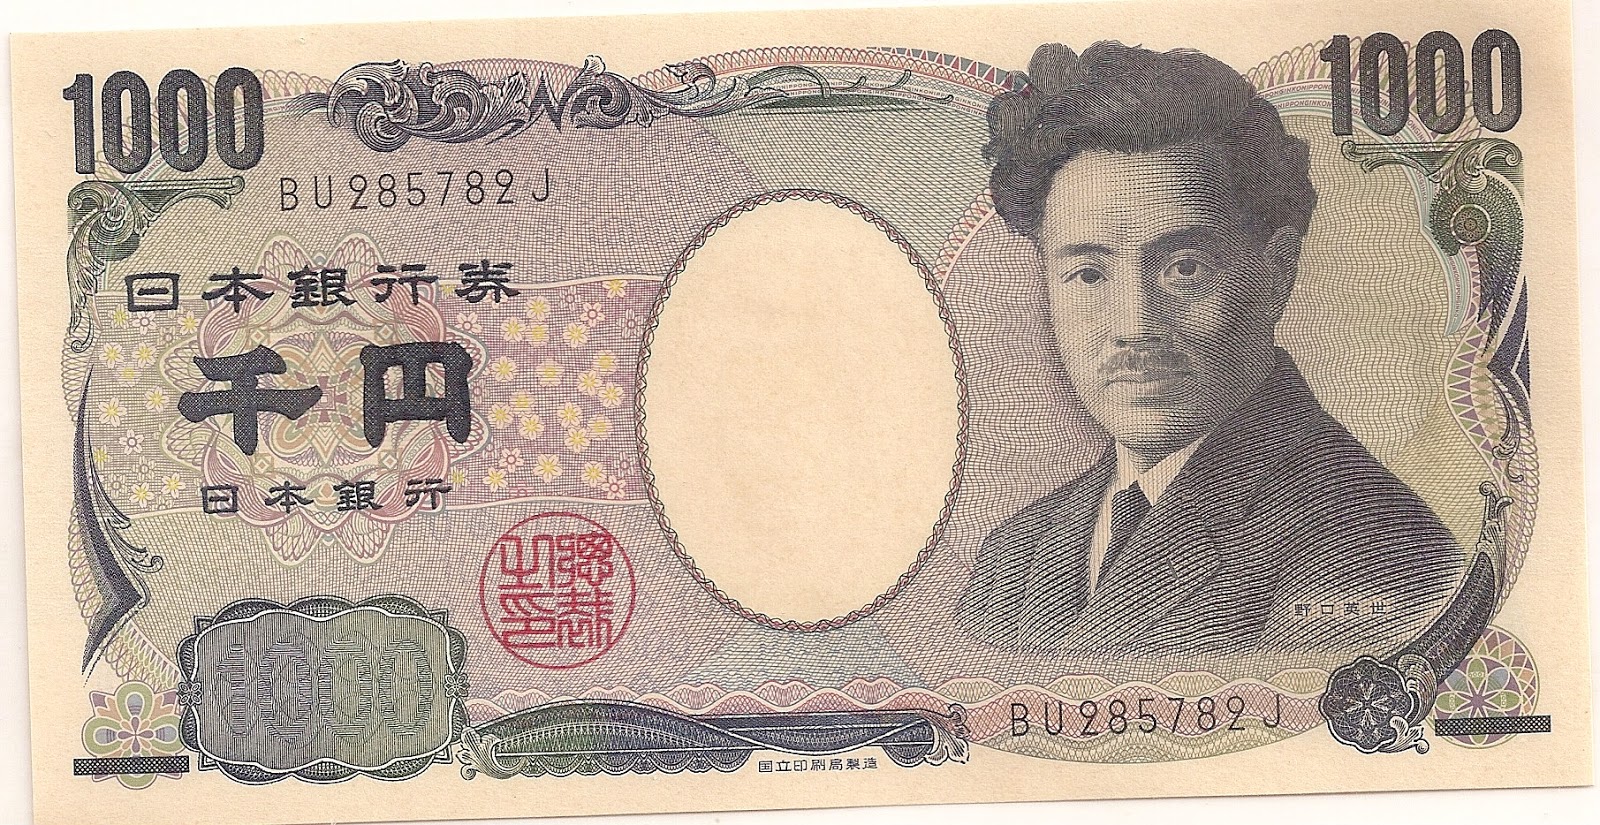 Mengenal Para Tokoh Jepang Yang Menjadi Visual Uang Kertas Yen